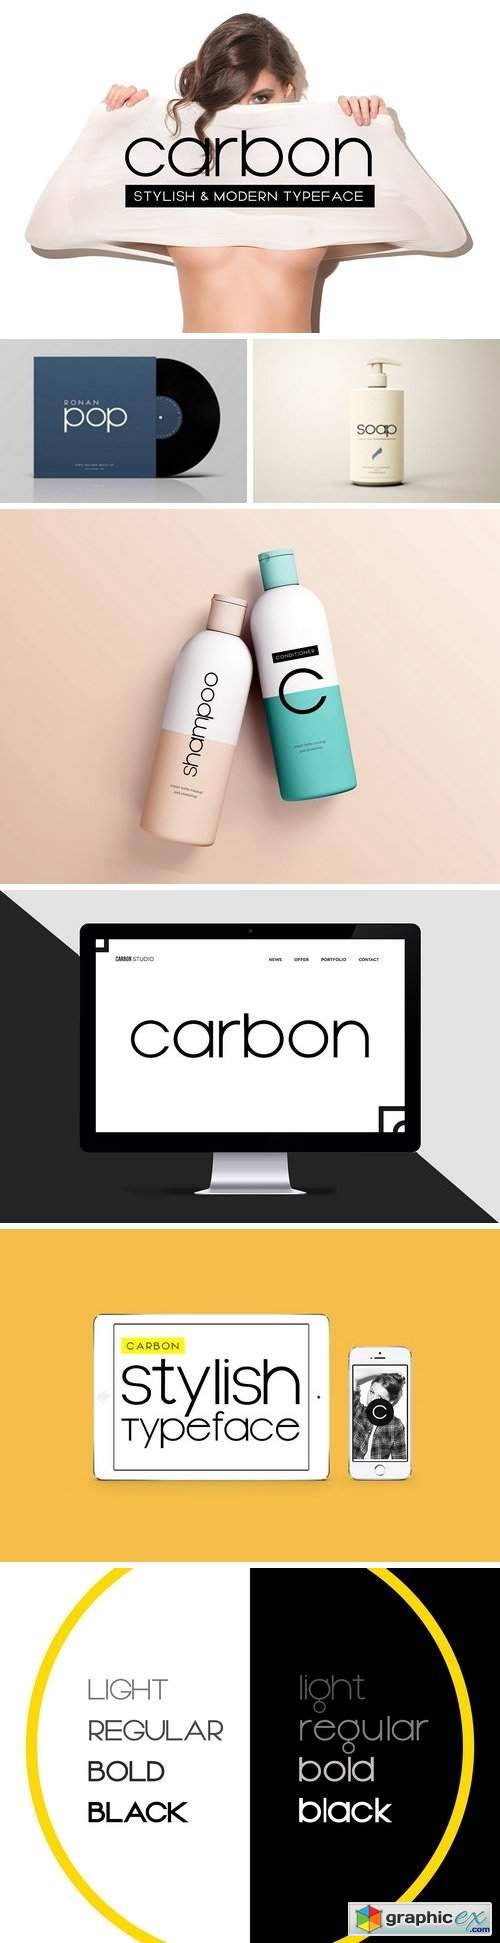 CARBON - Stylish Display Typeface